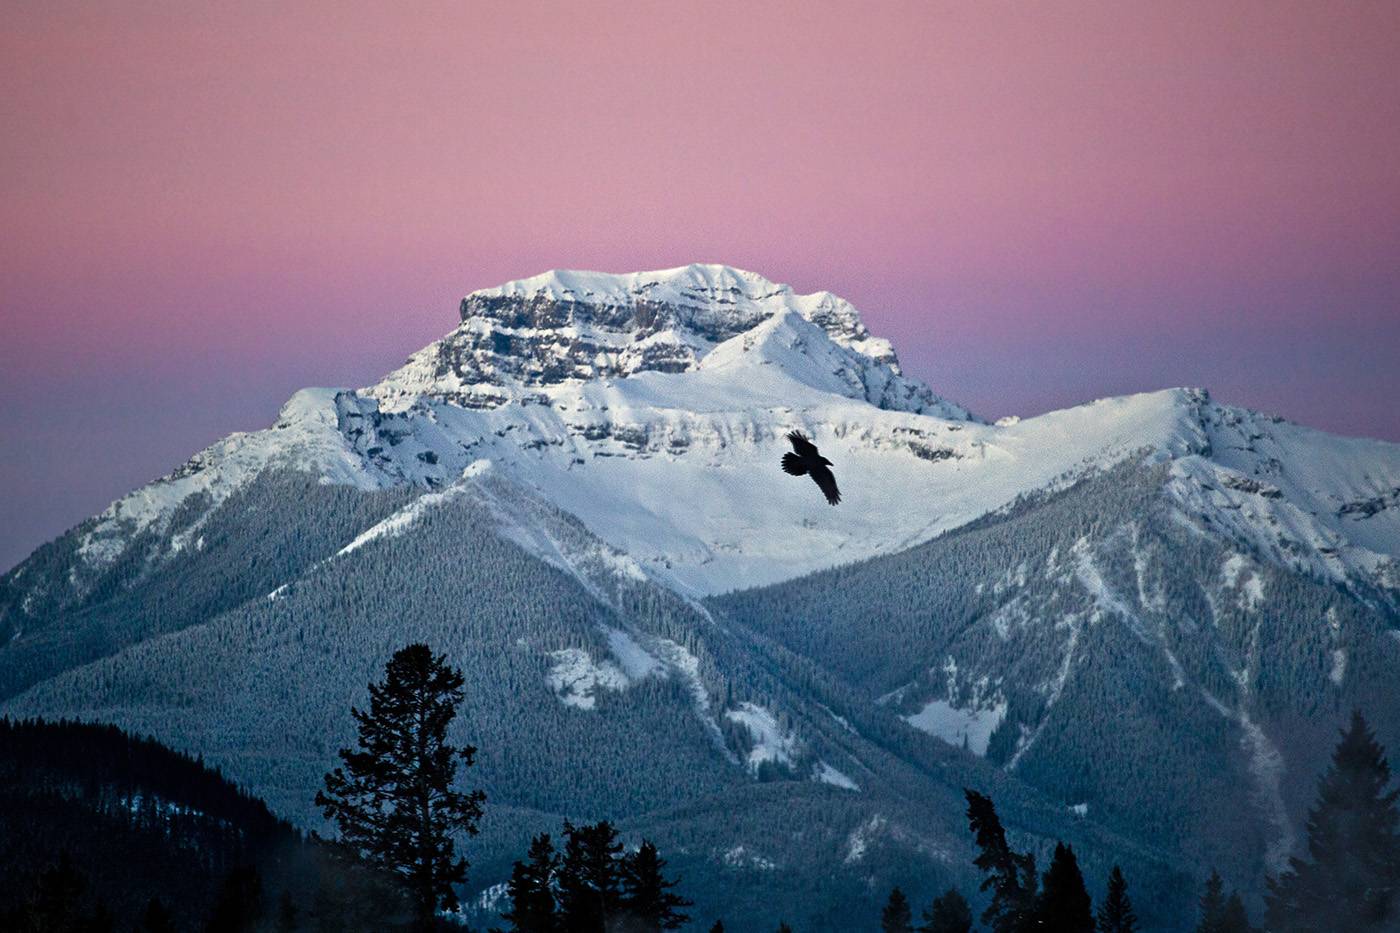 Alberta Mountains At Sunrise, Canada